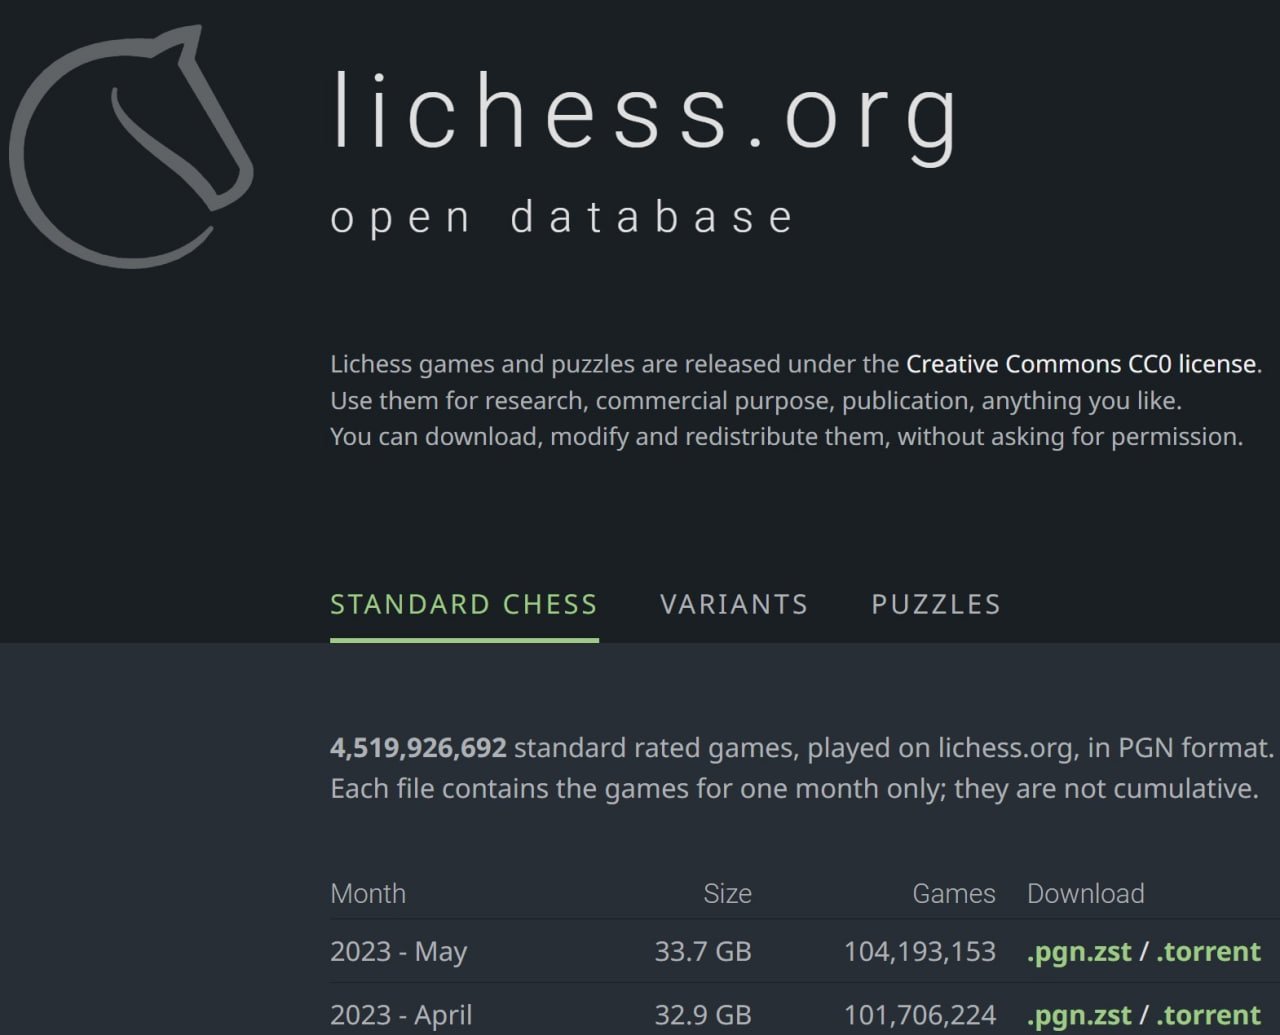 lichess.org open database